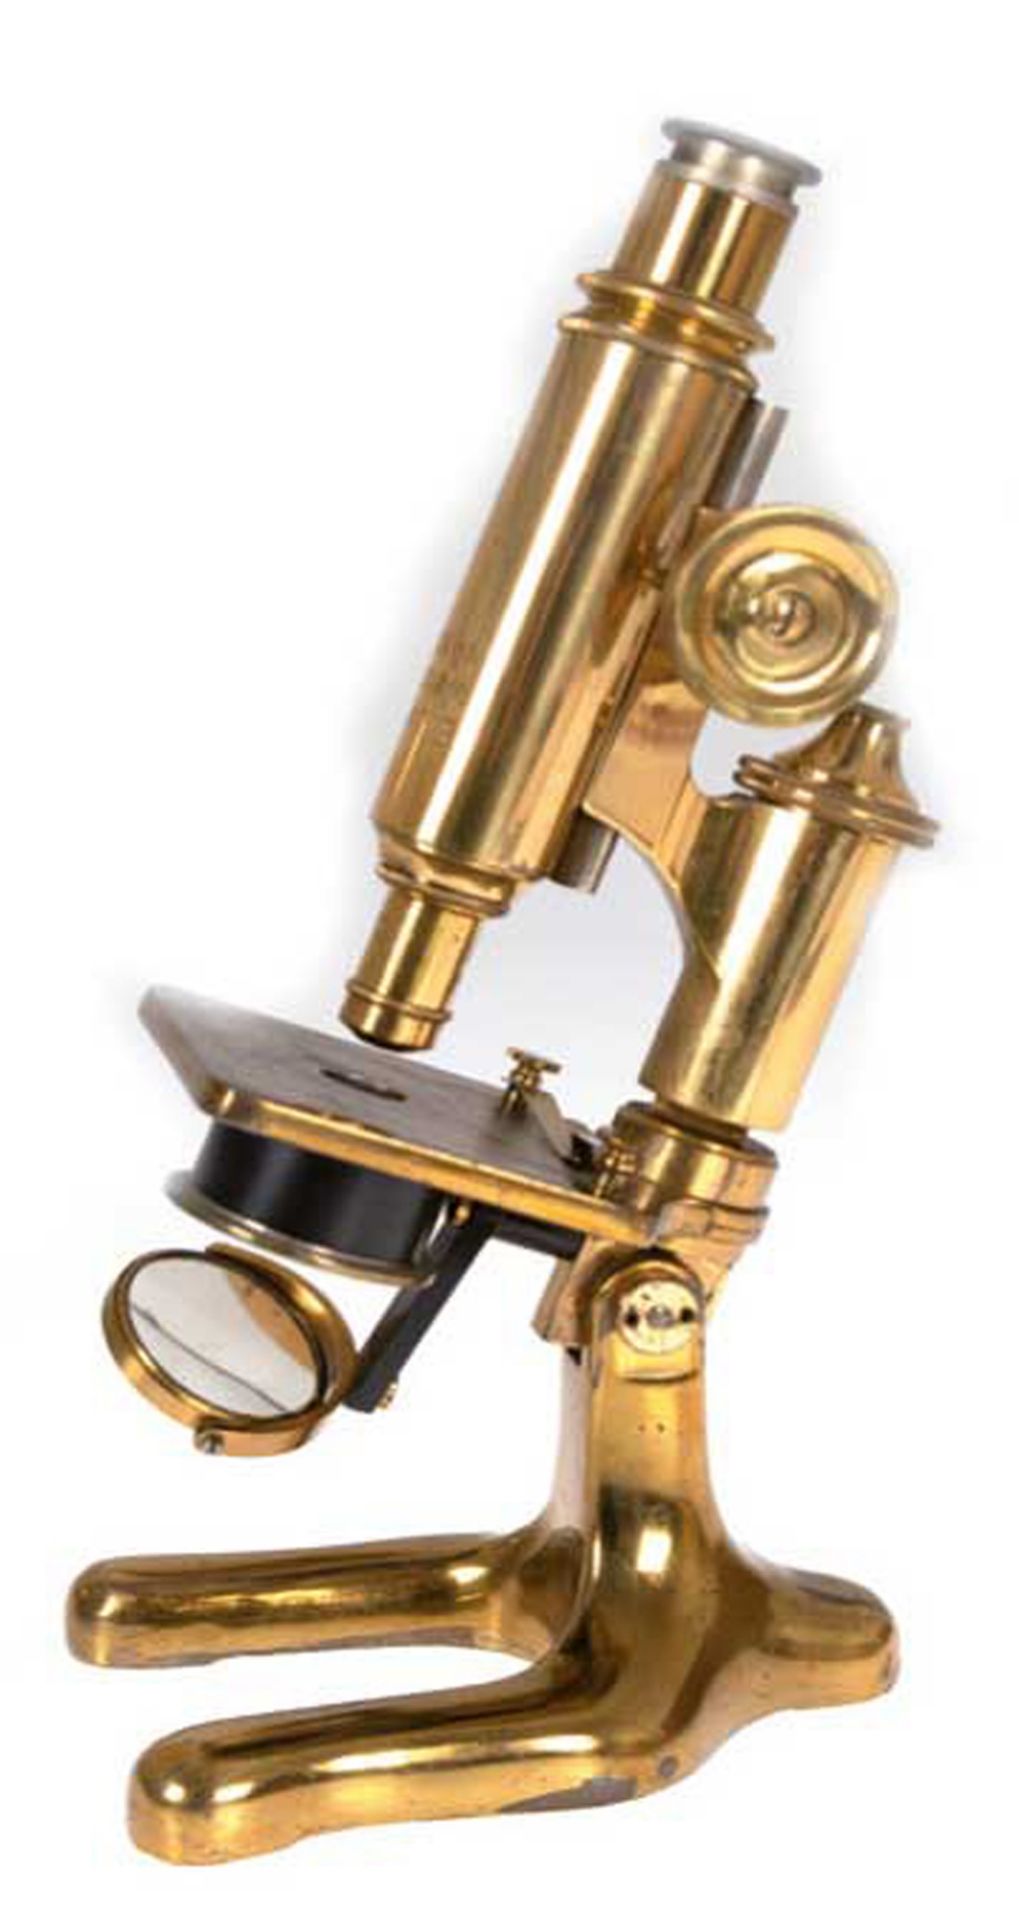 Mikroskop "E. Leitz Wetzlar", 19. Jh., massives Messingstativ, fein justierbare Höhenverstellung de